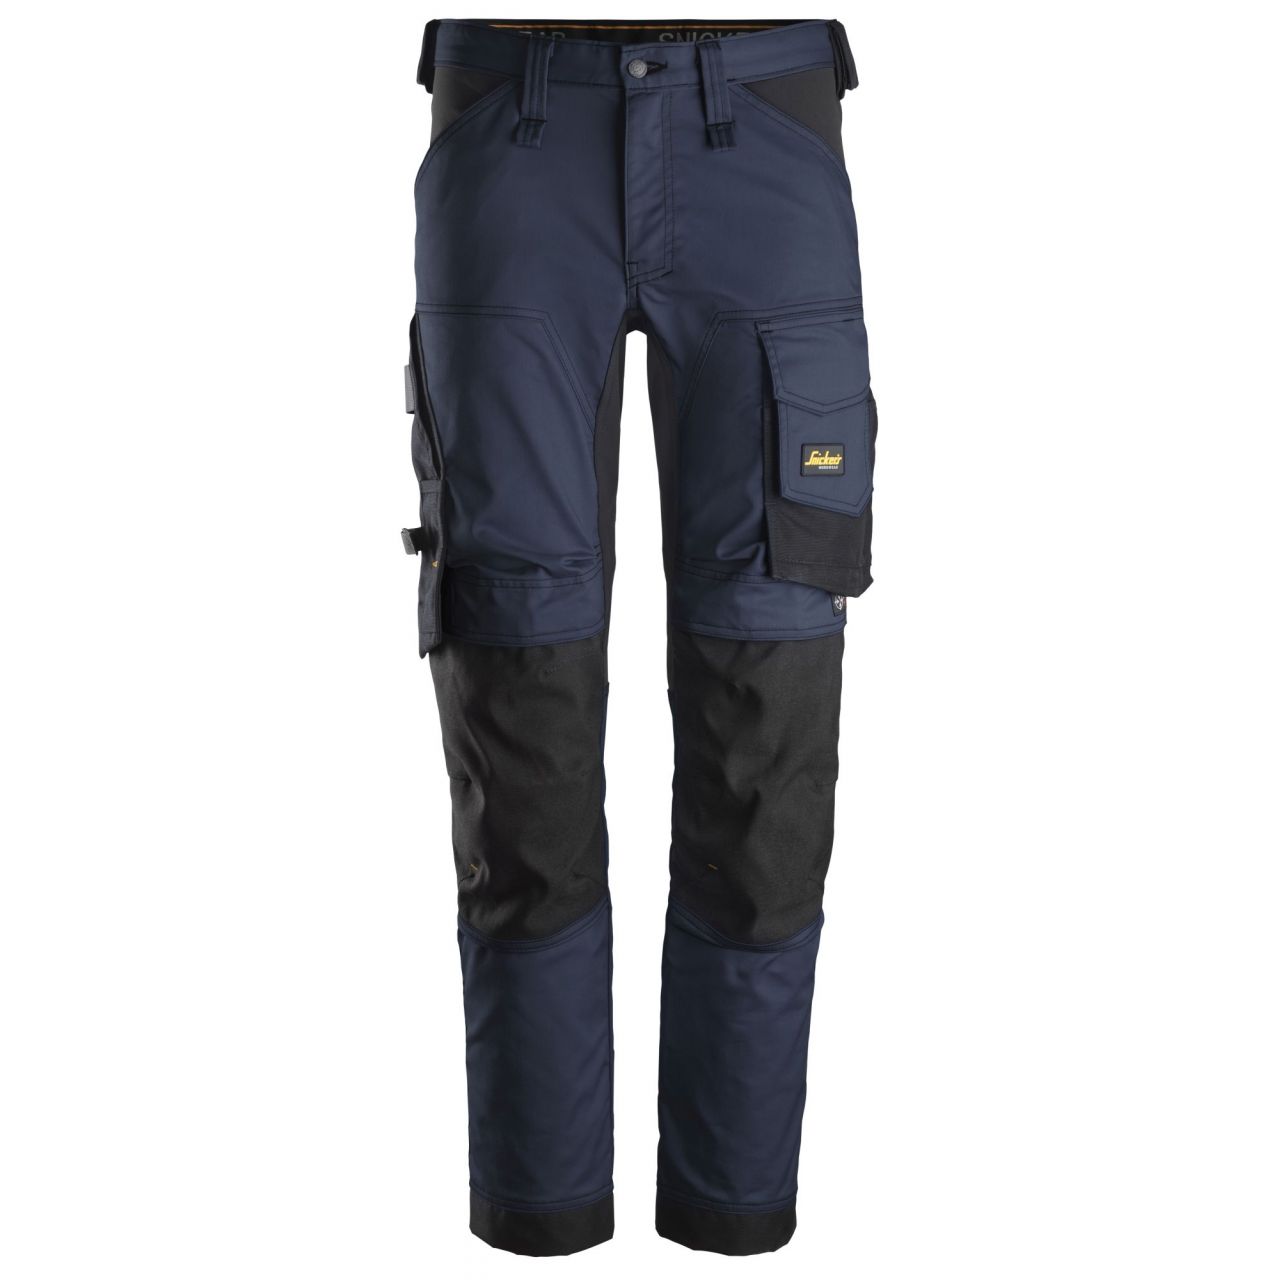 Pantalones elásticos AllroundWork Azul Marino-Negro talla 60